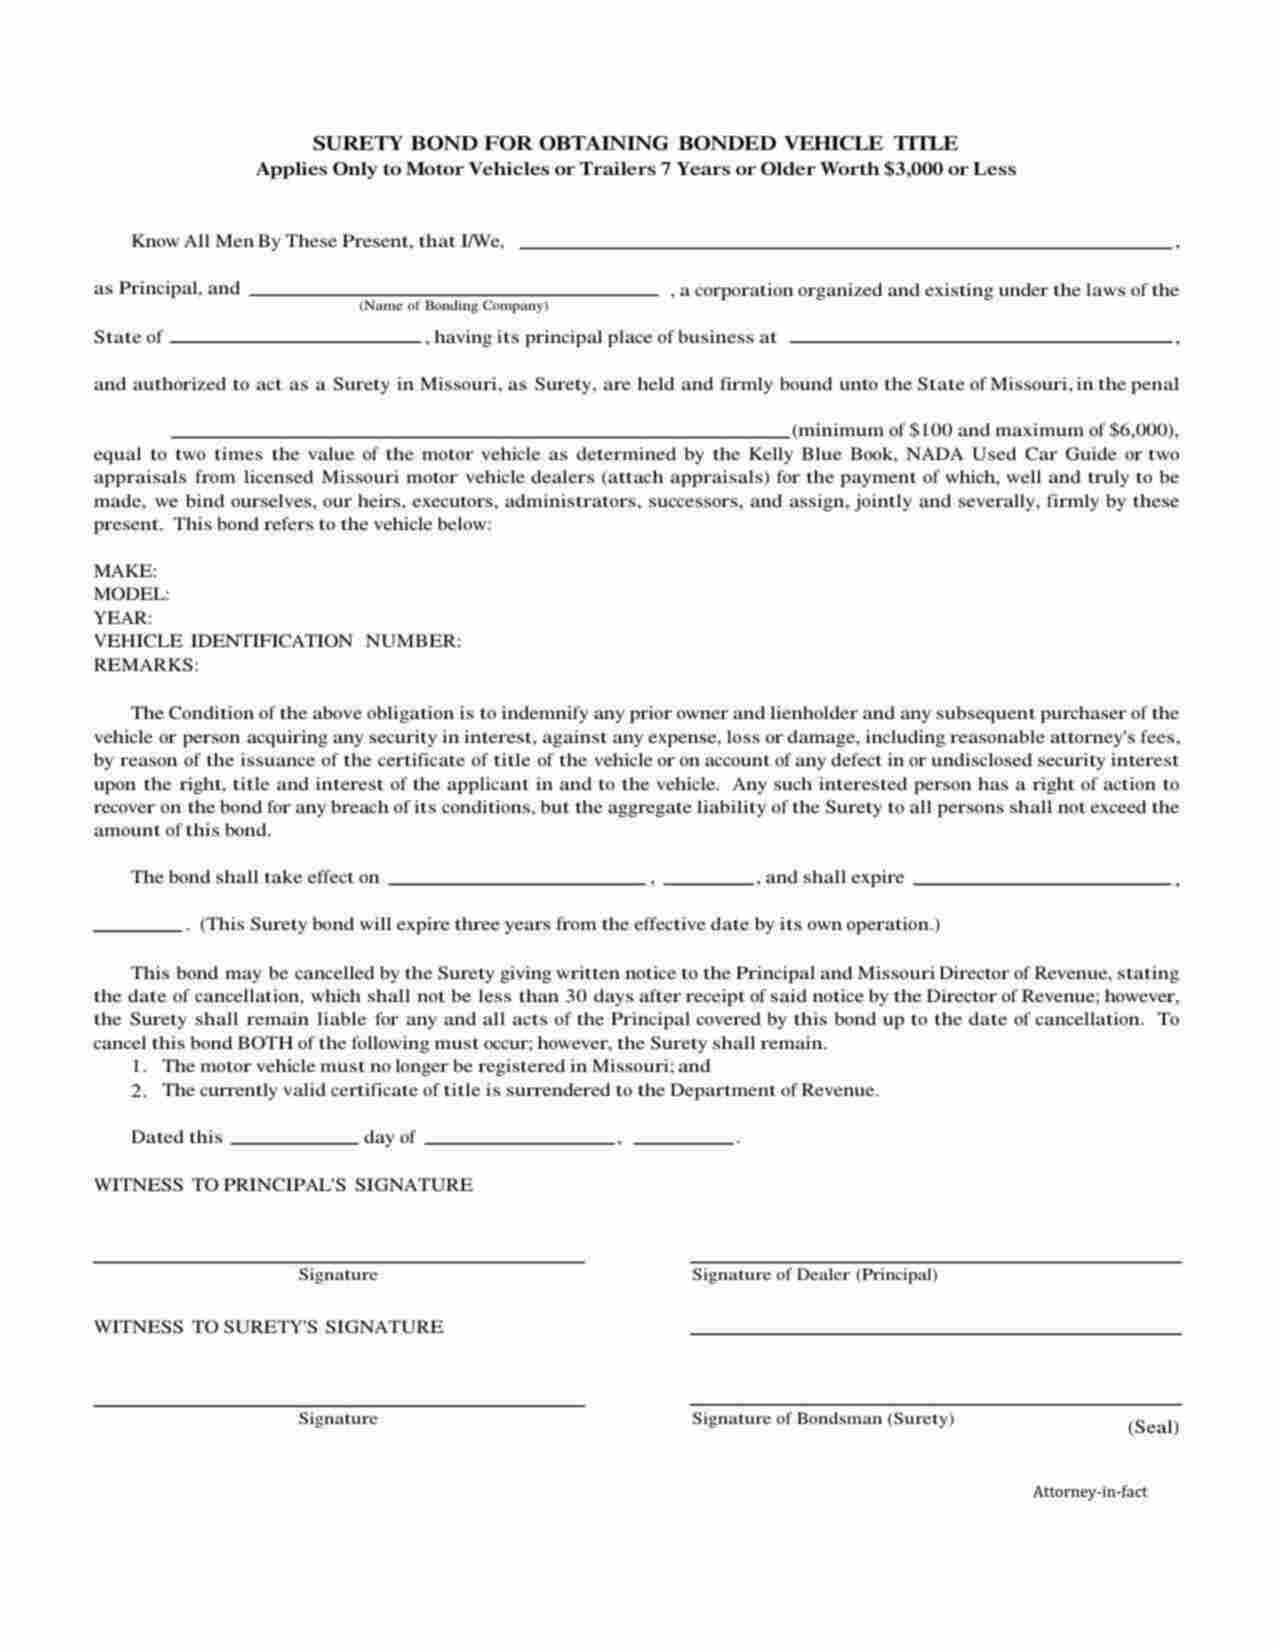 Missouri Motor Vehicle Certificate of Title Bond Form